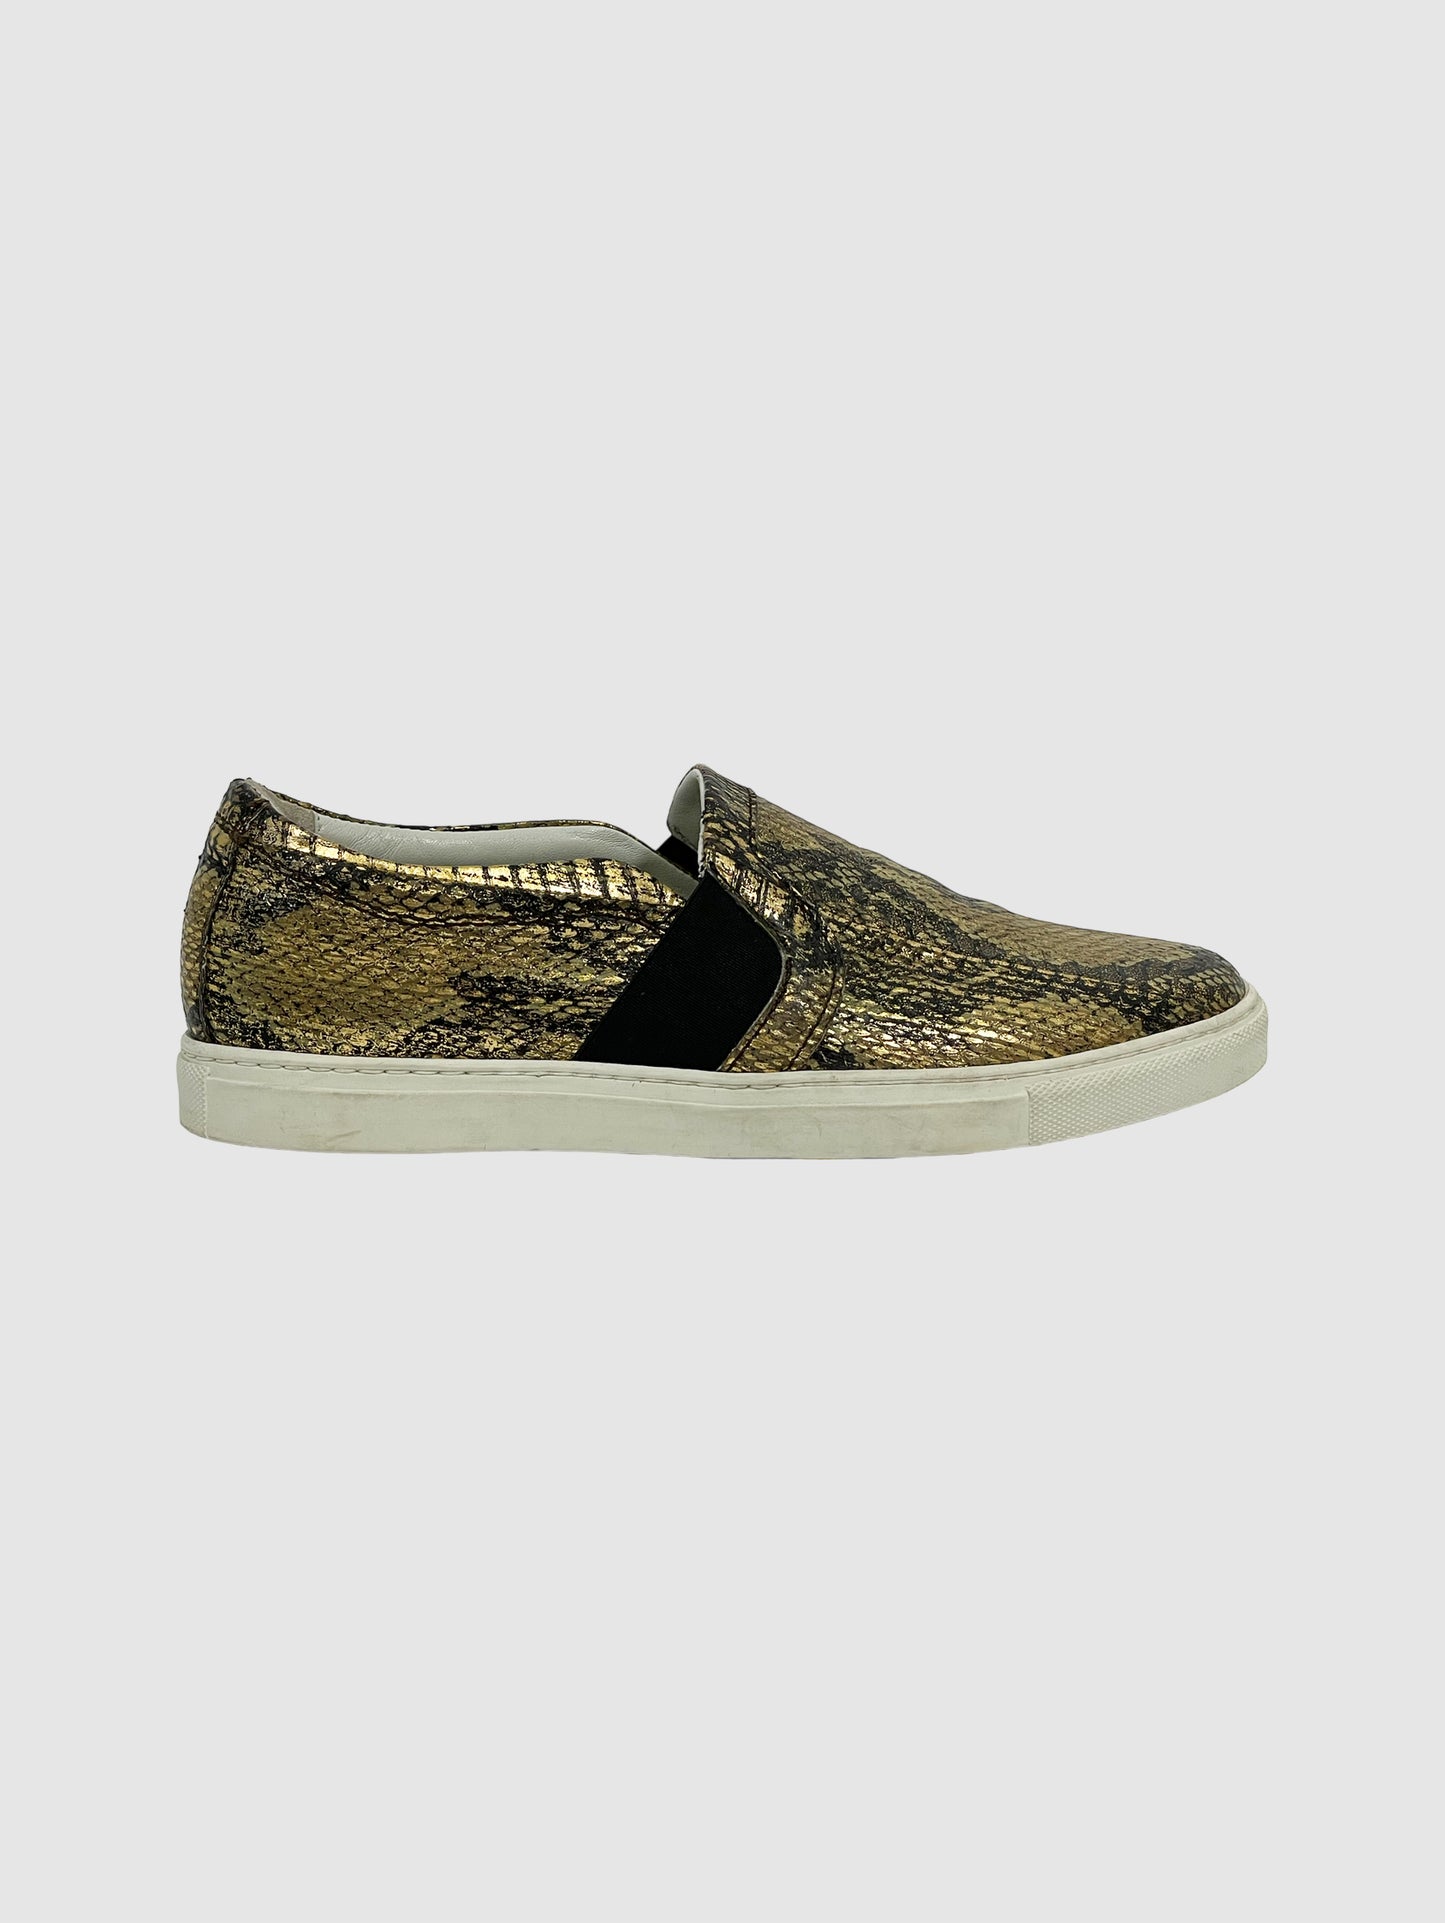 Lanvin Reptile Print Slip-On Sneakers - Size 38